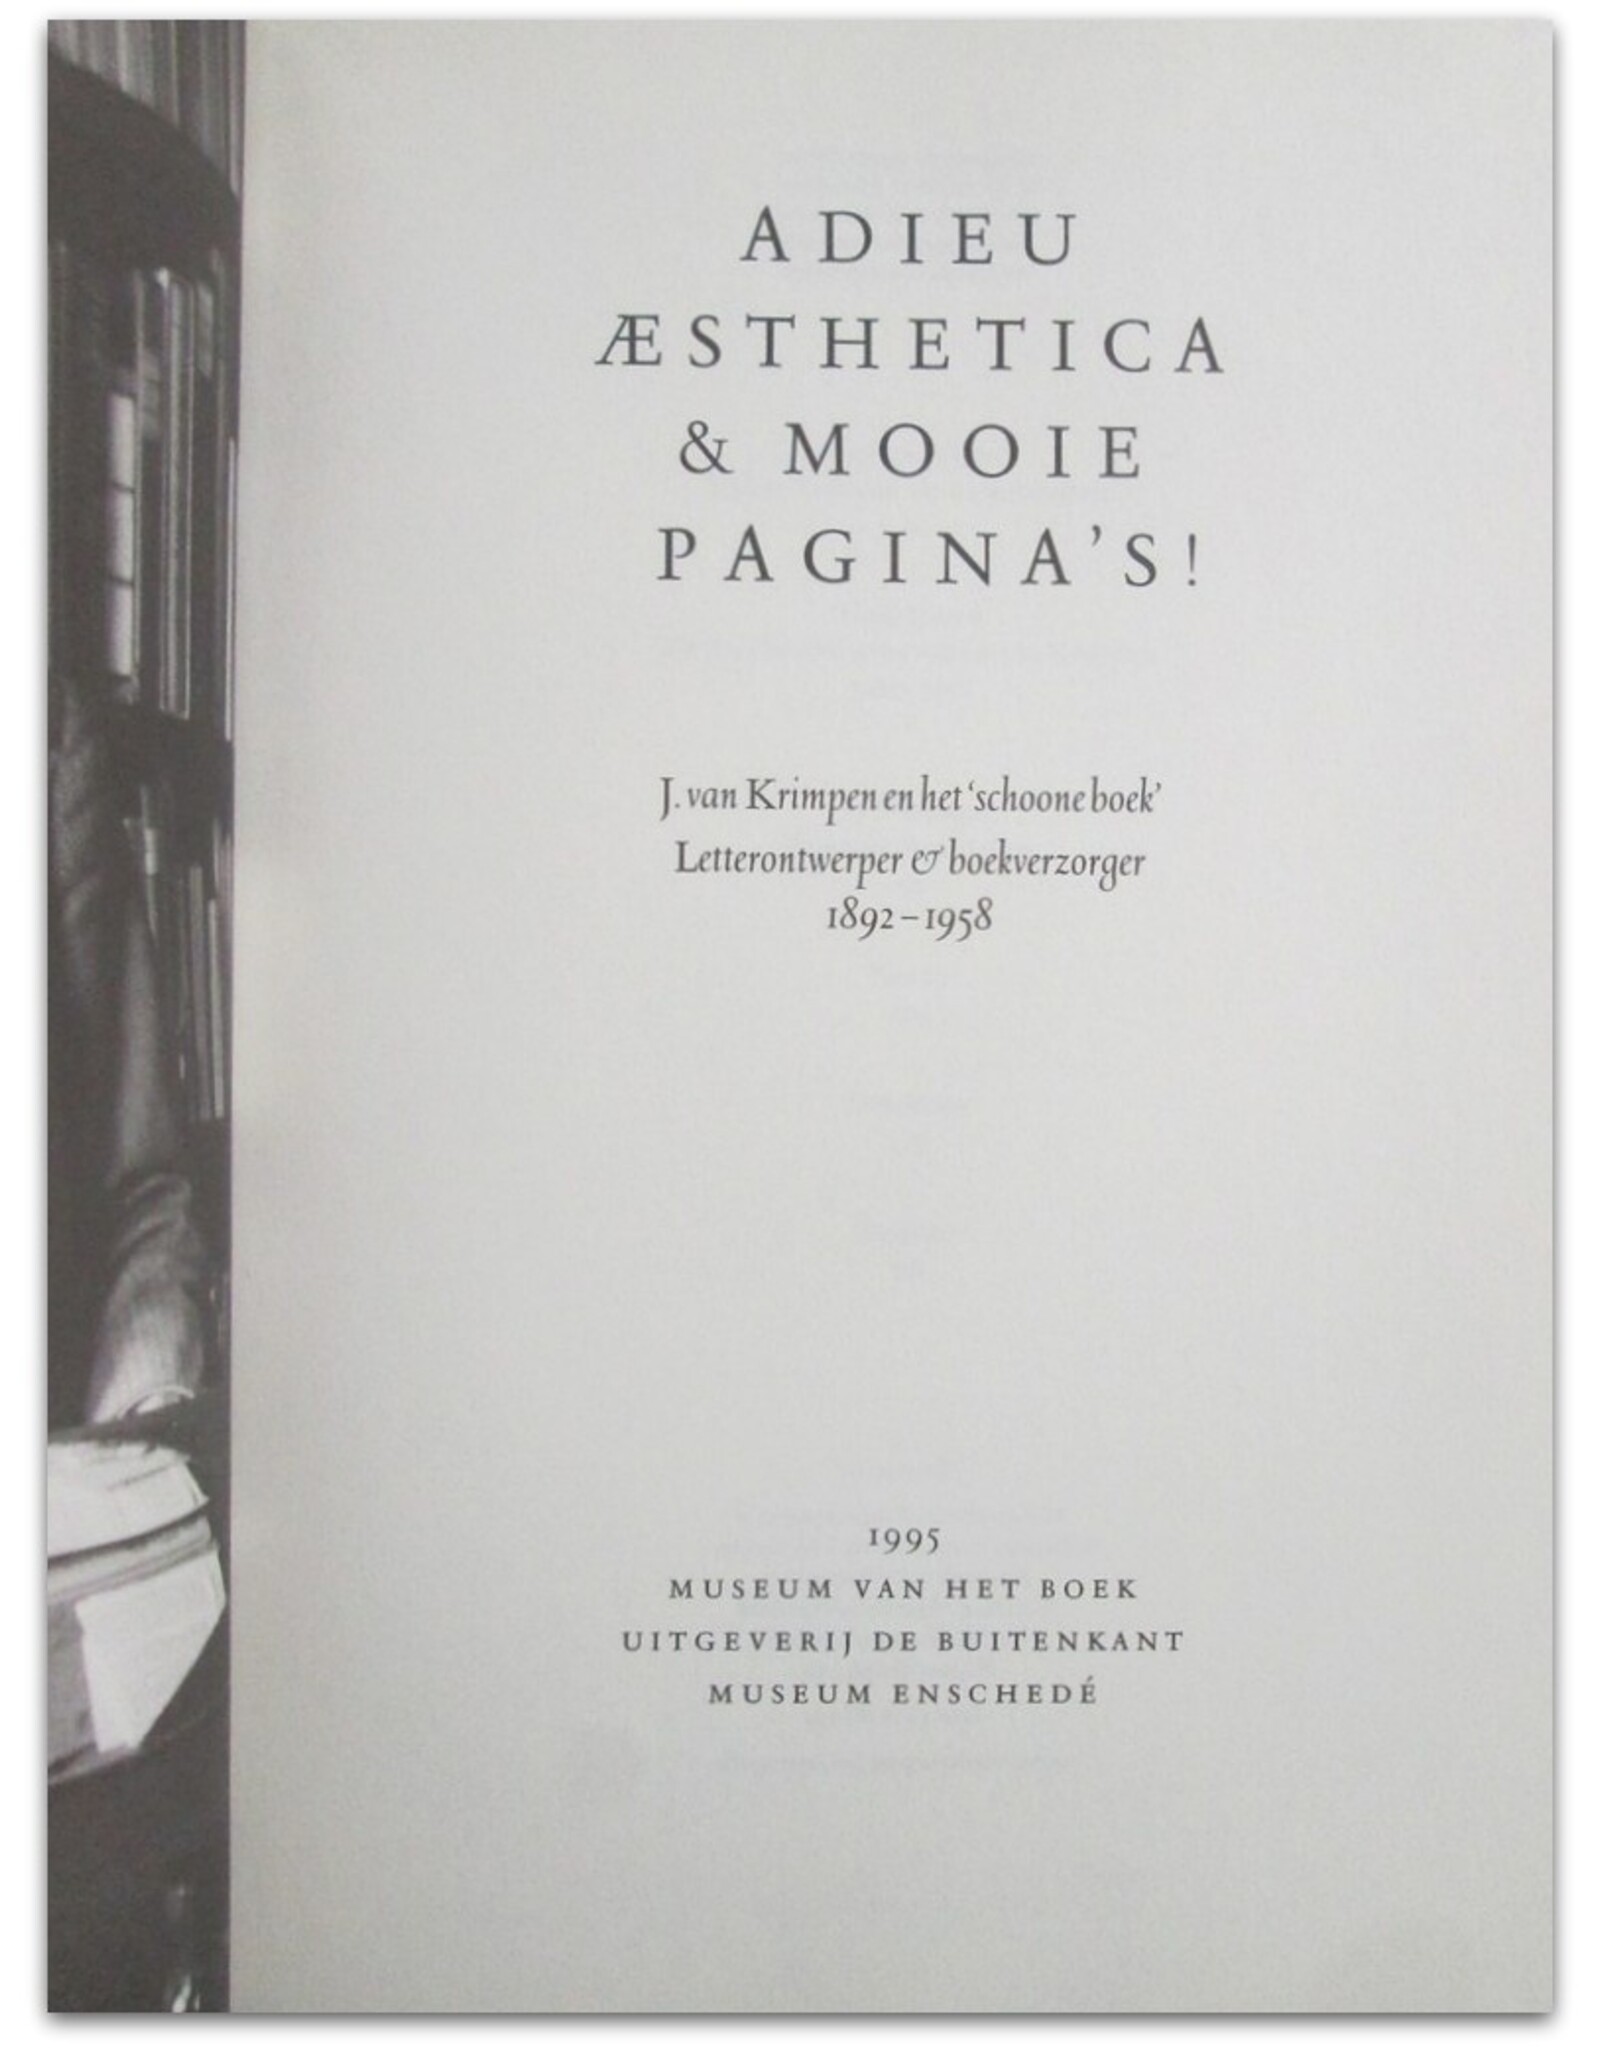 Koosje Sierman [red.] - Adieu aesthetica & mooie pagina's!: J. van Krimpen en het 'schoone boek'. Letterontwerper & boekverzorger 1892-1958